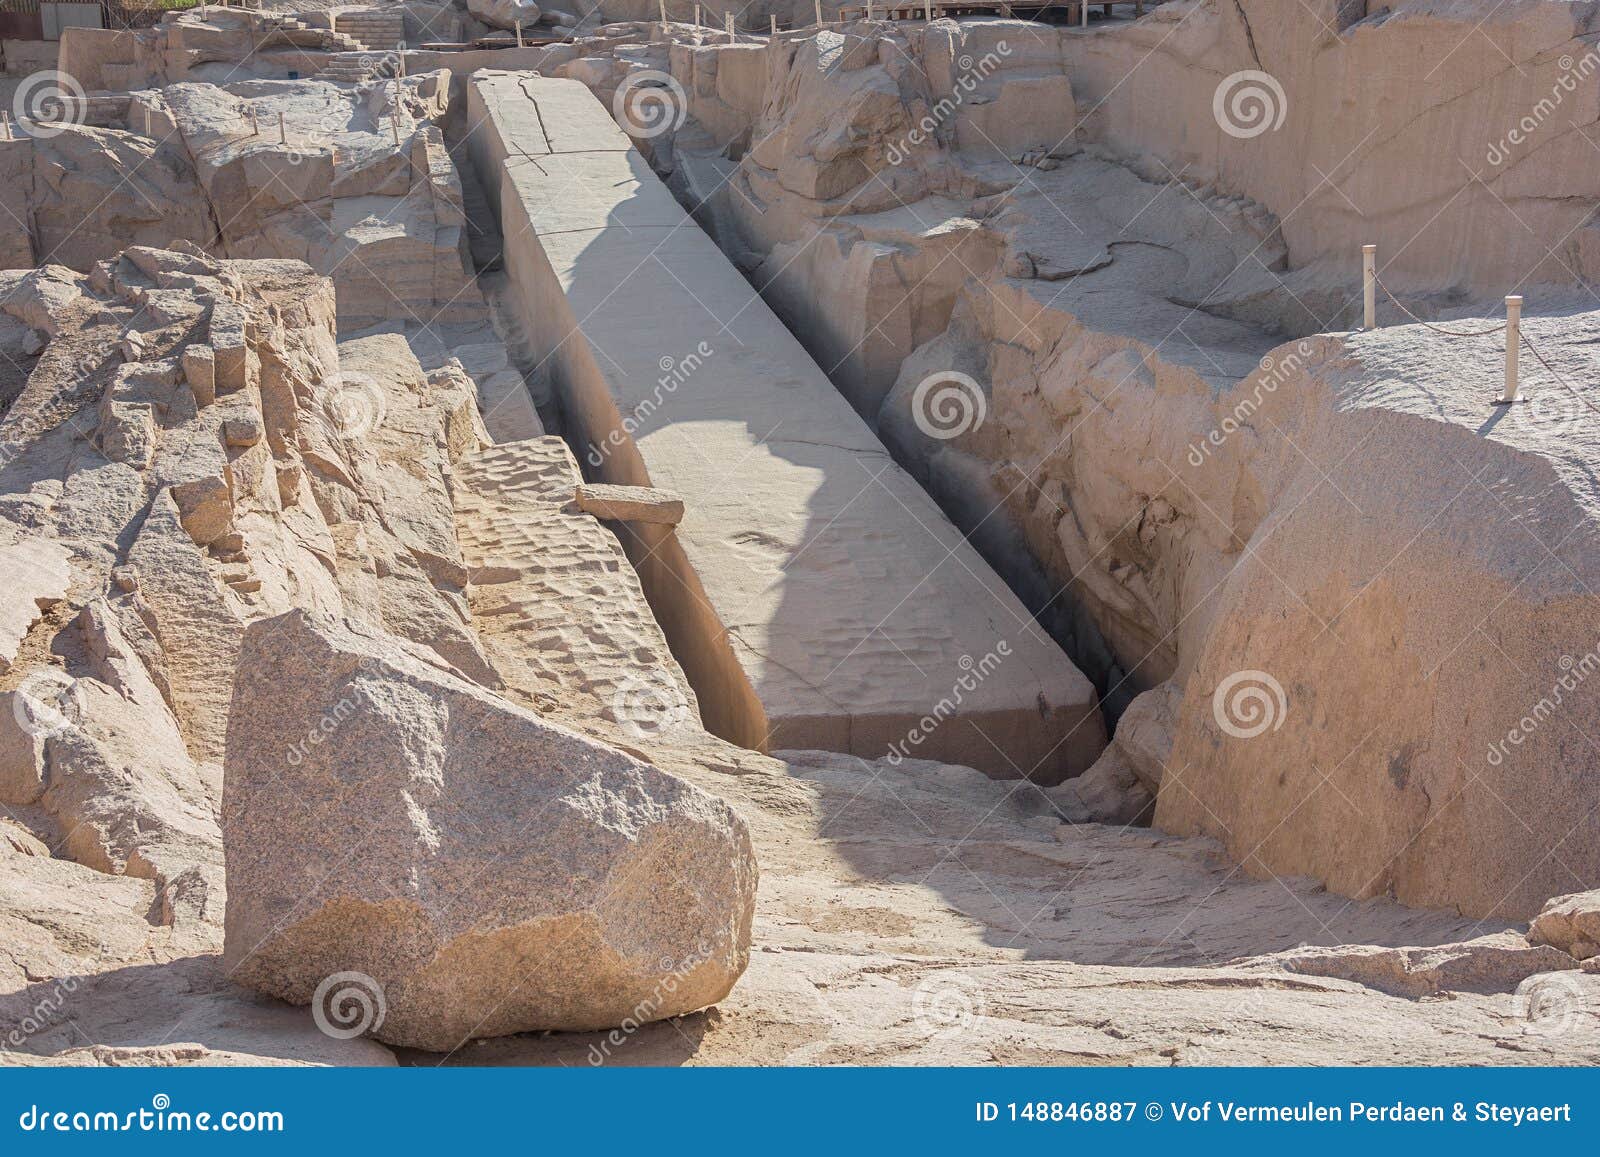 the unfinished obelisk of aswan